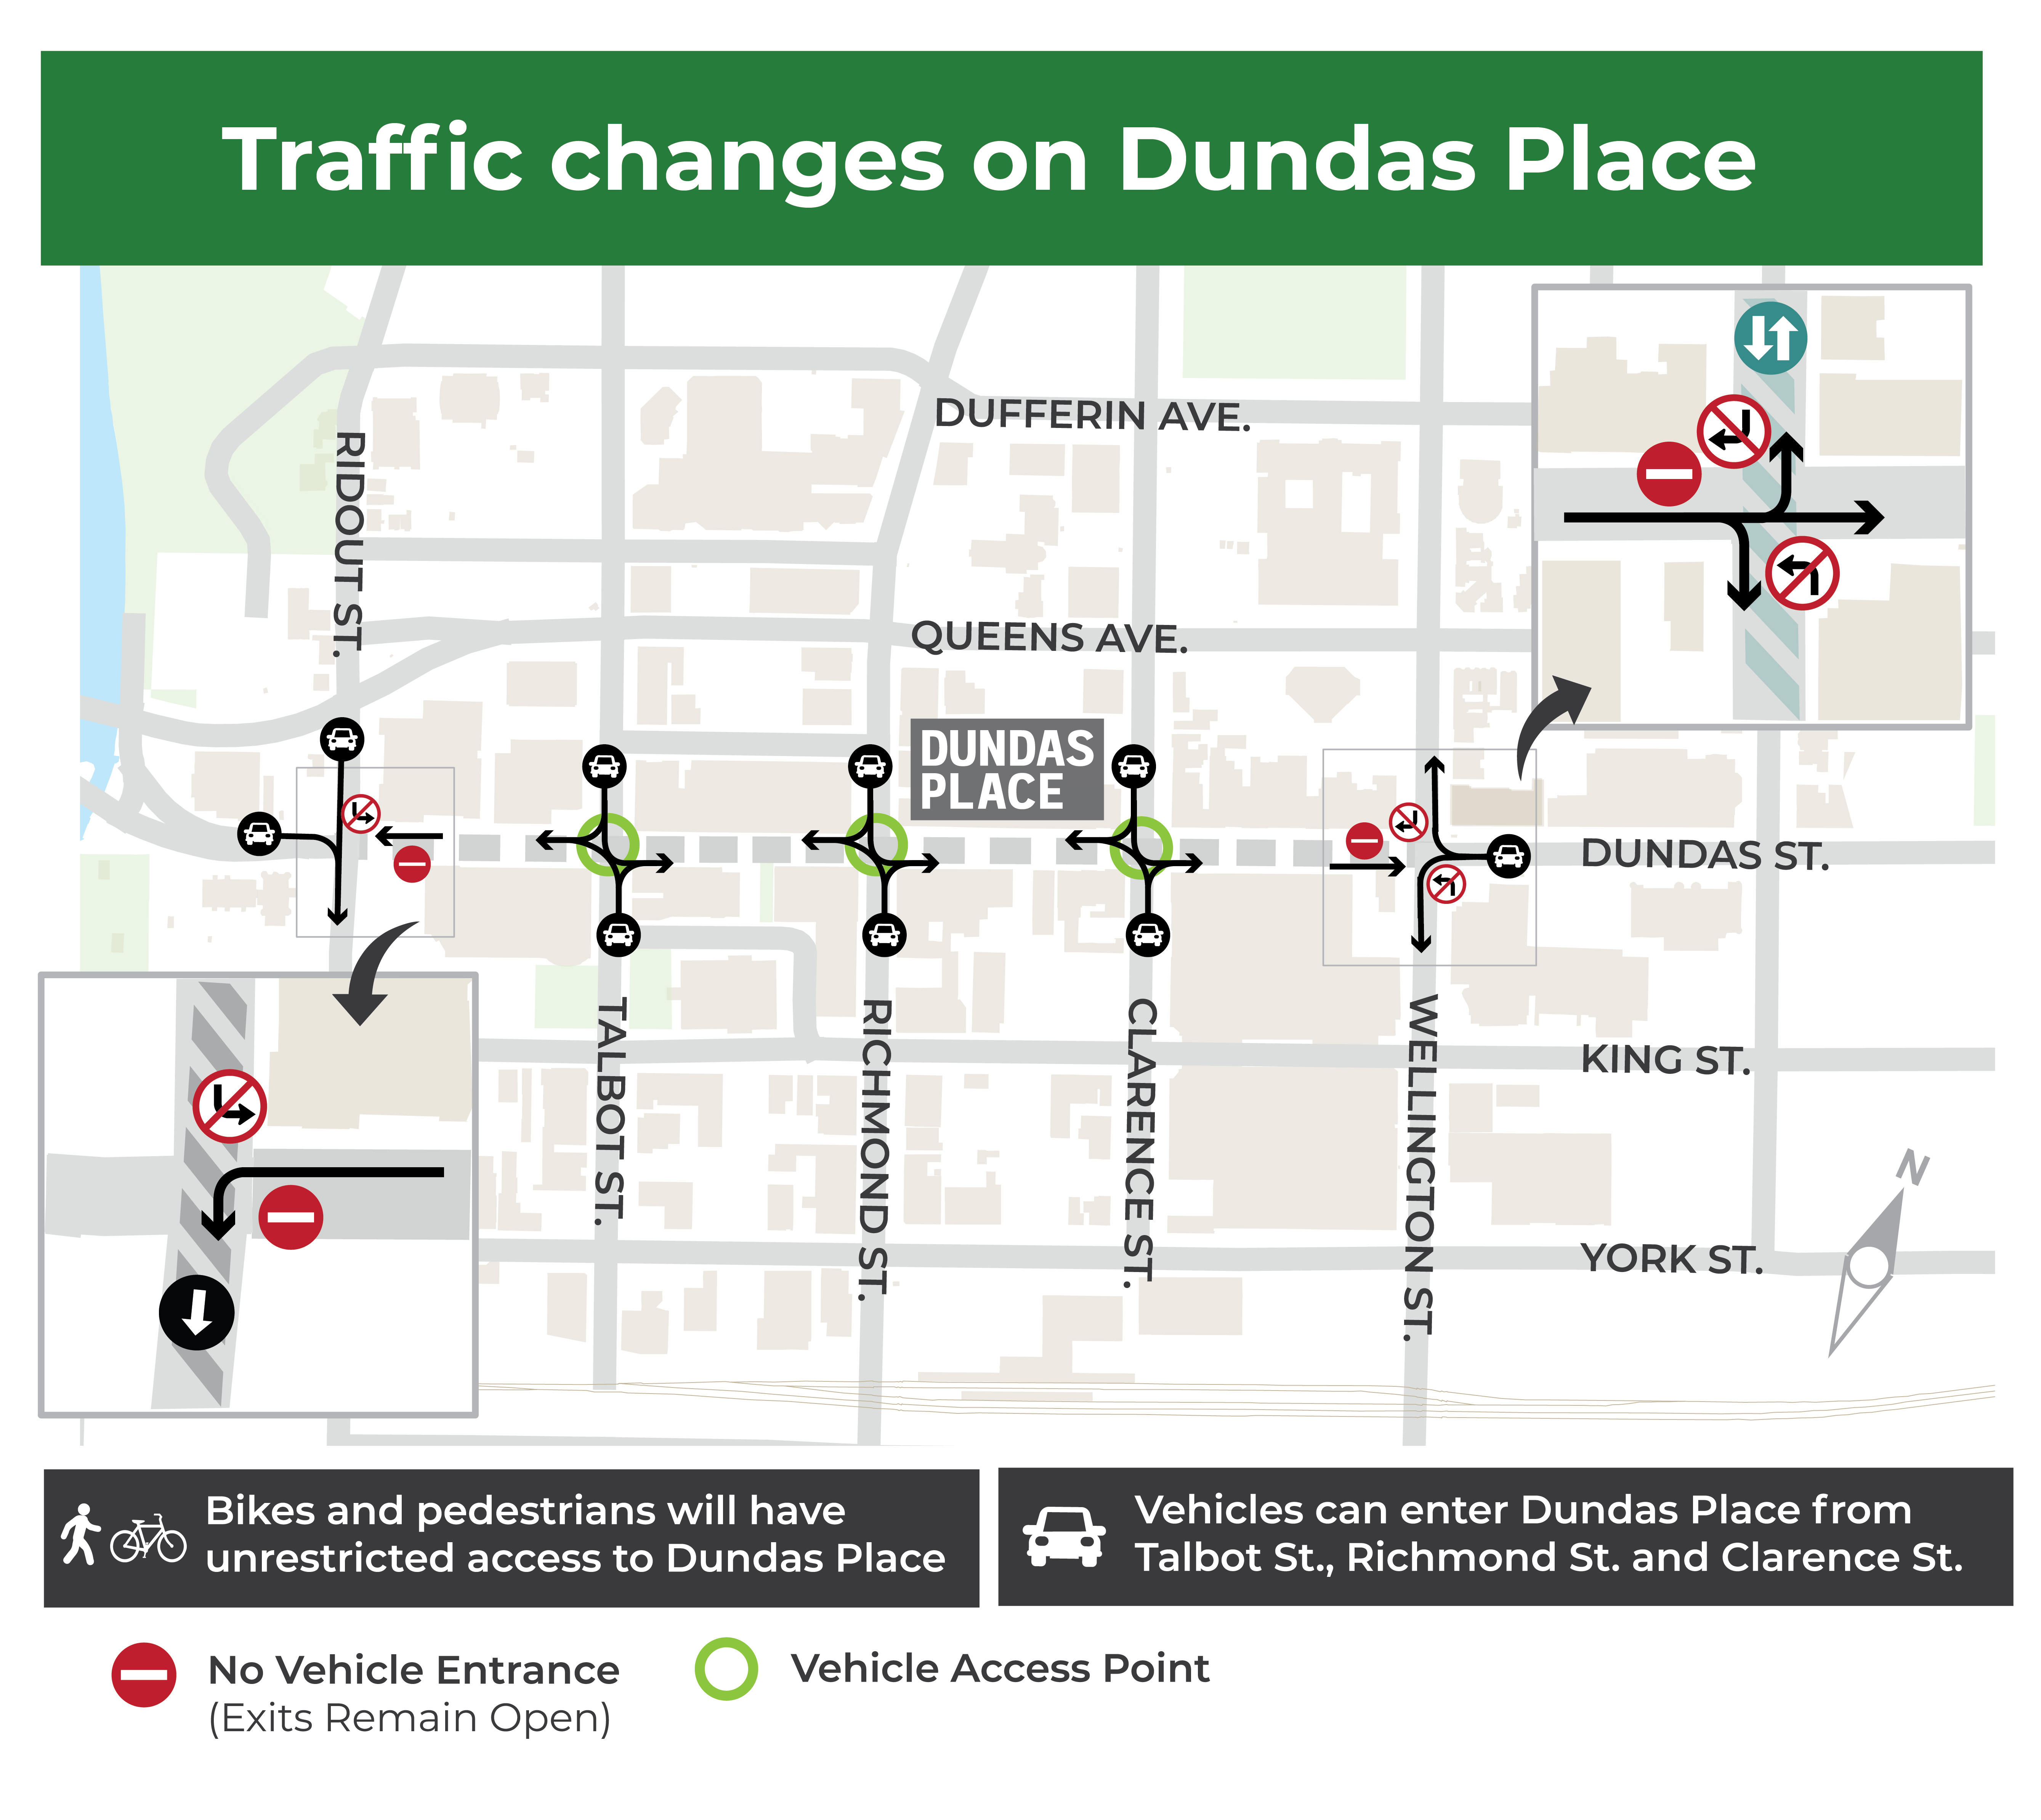 Dundas Place traffic diversion